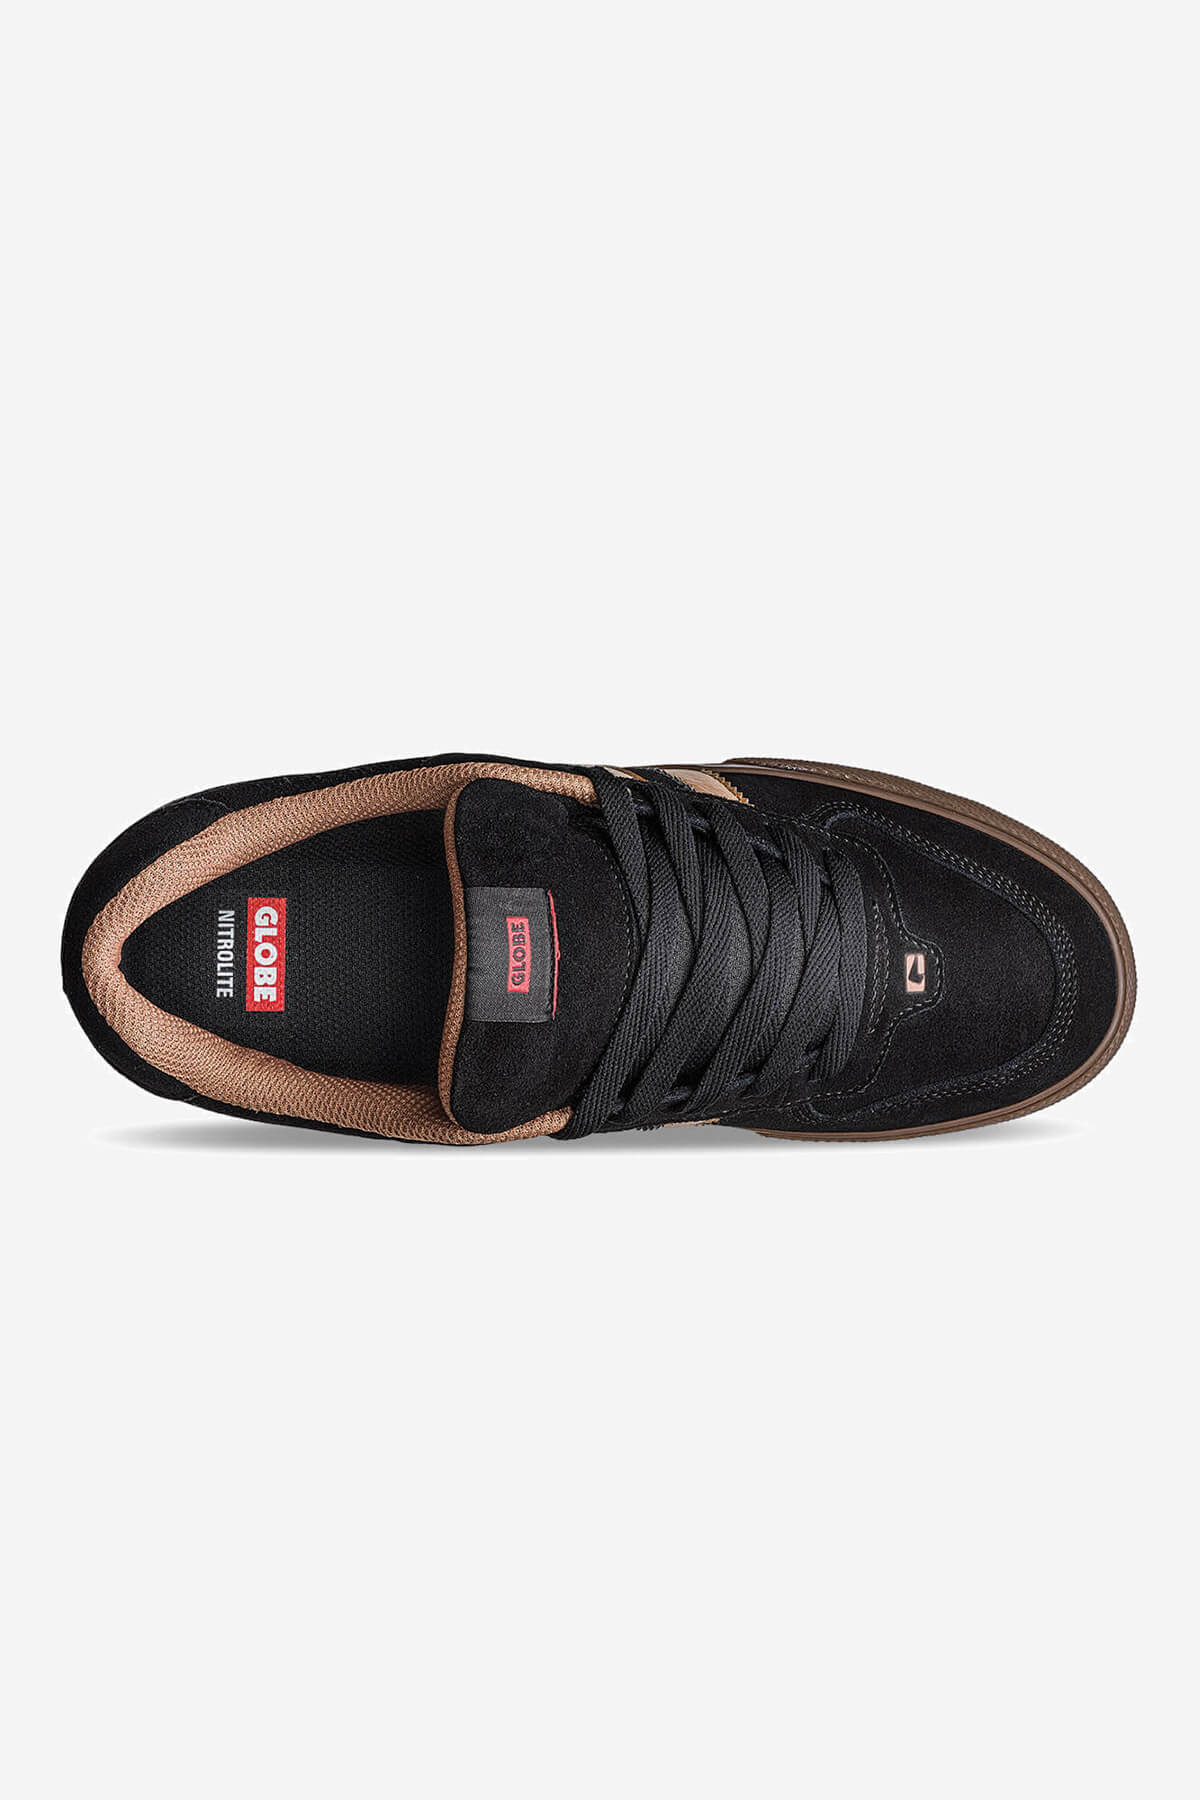 encore-2 nero marrone skateboard scarpe